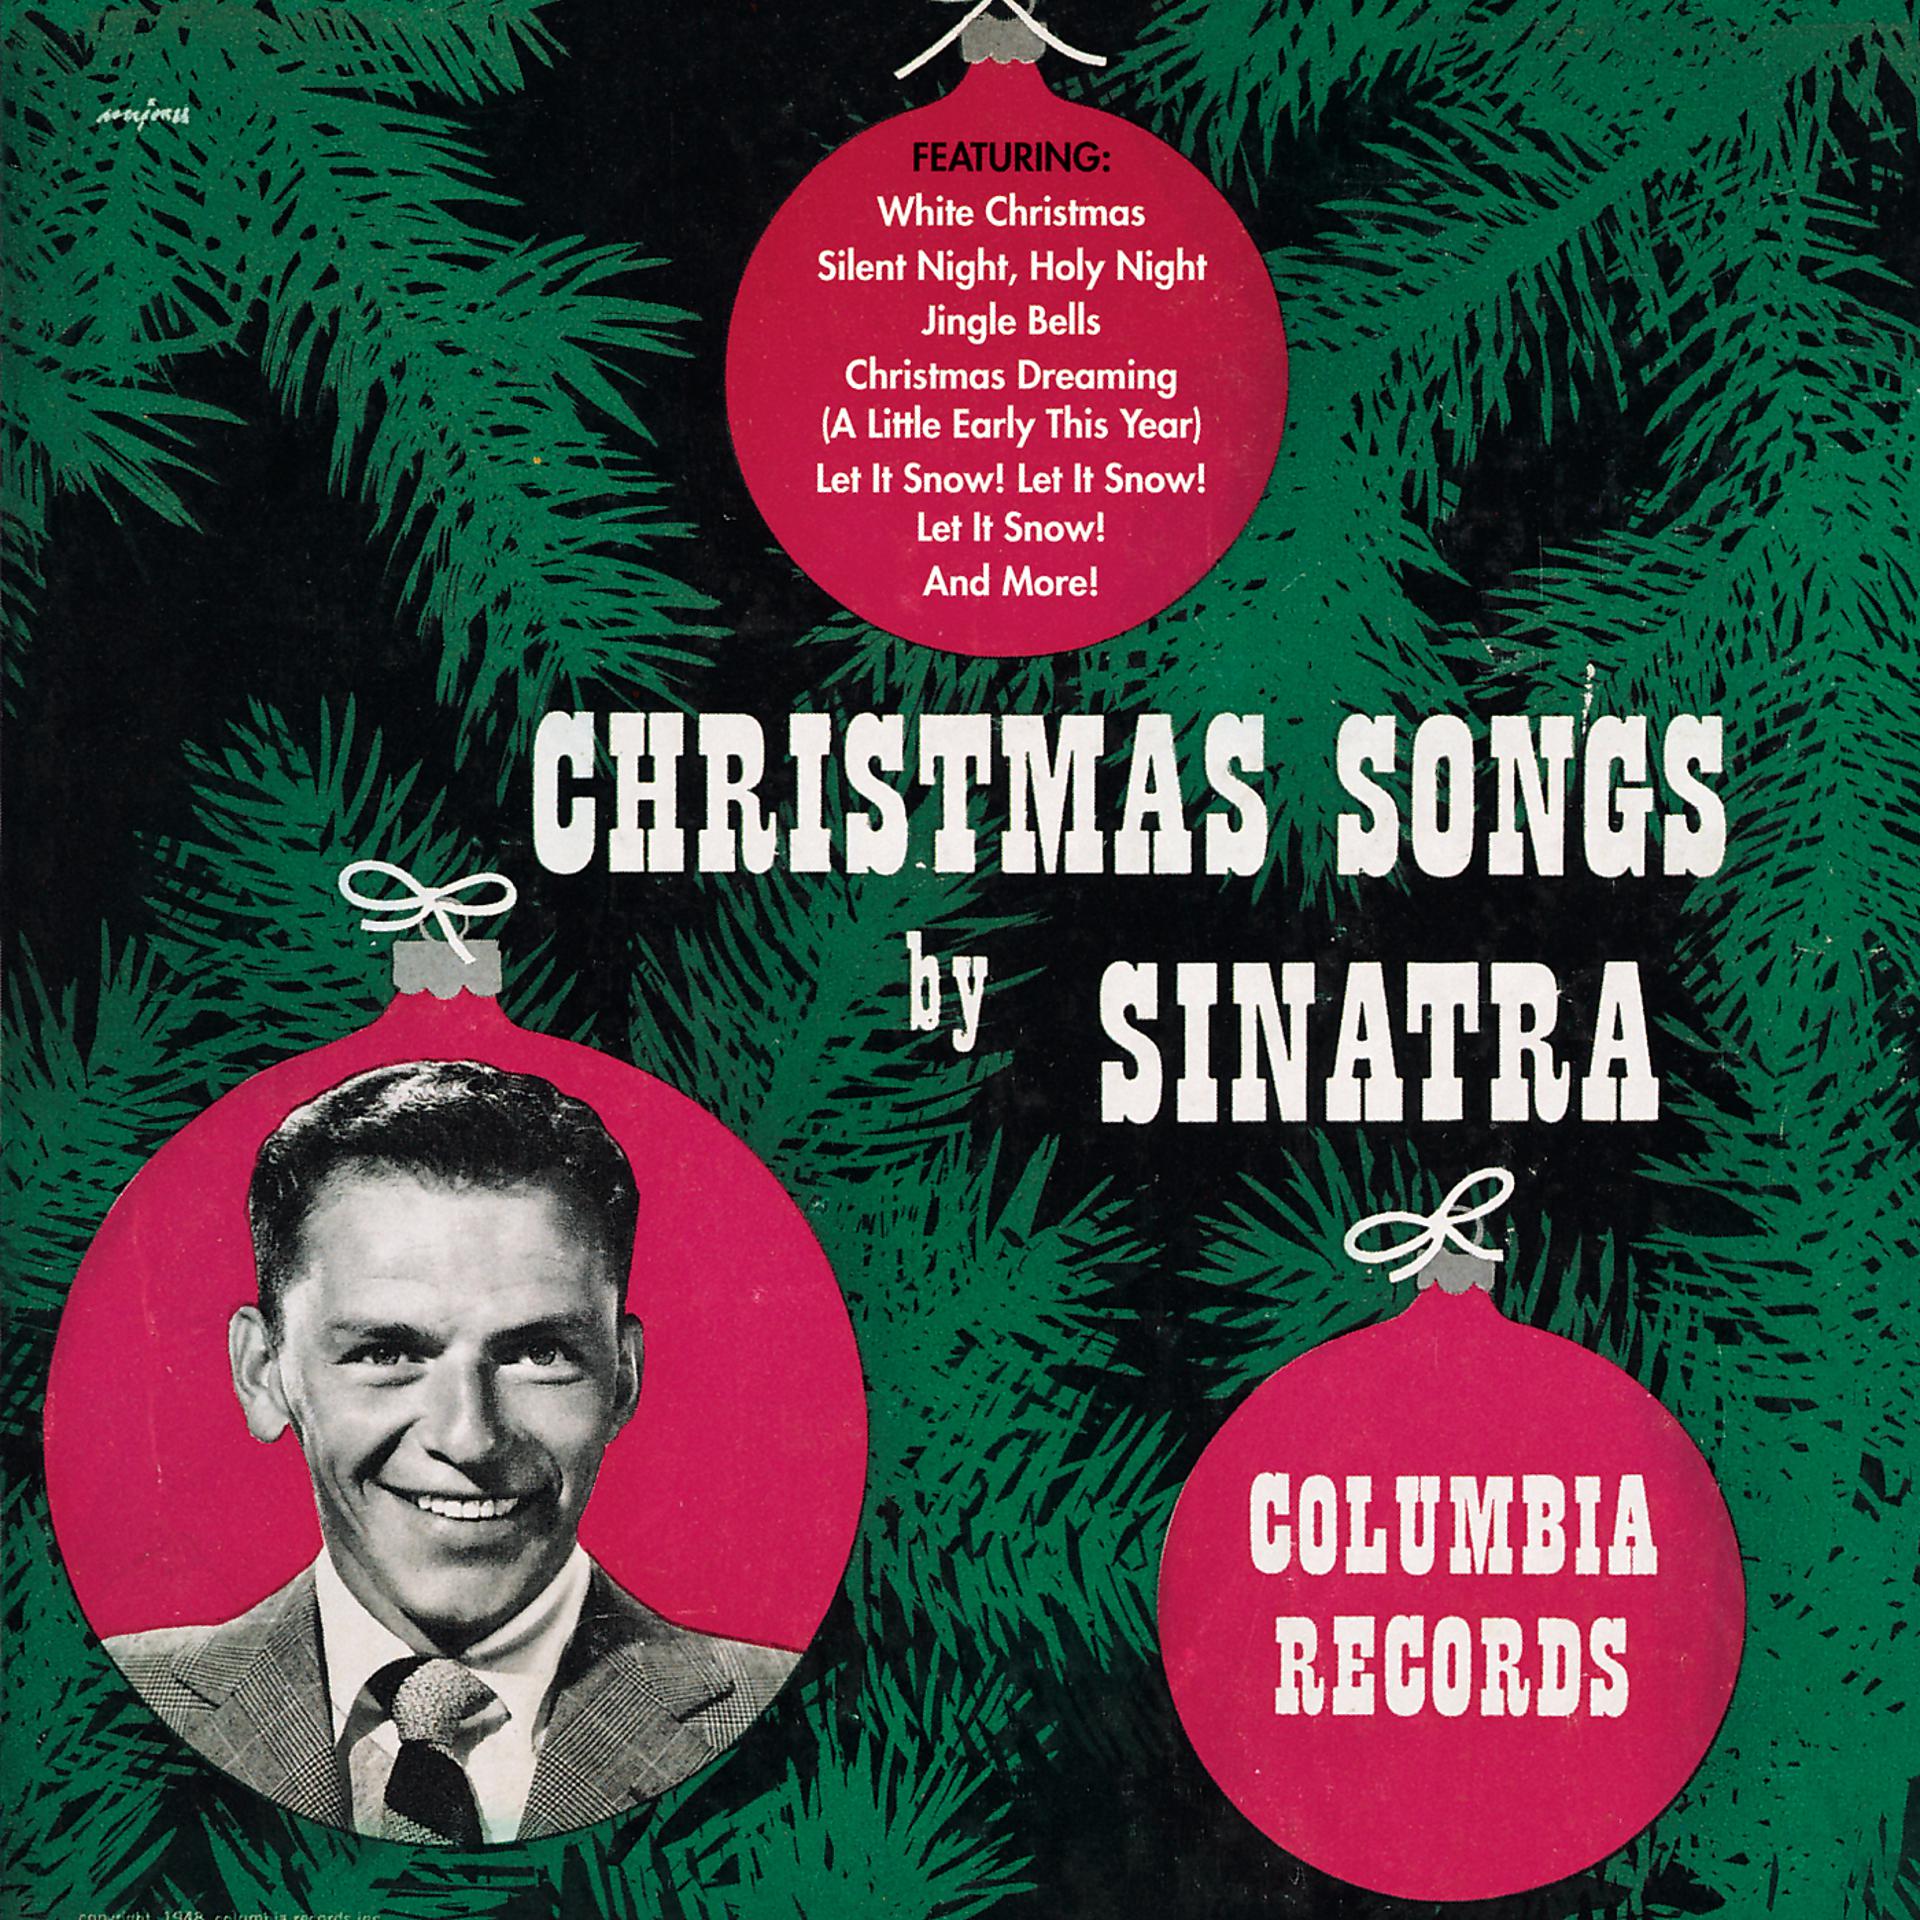 Christmas Songs by Sinatra Фрэнк Синатра. Frank Sinatra Christmas album. Фрэнк Синатра лет ИТ Сноу. Frank Sinatra Let it Snow обложка. Белое рождество песня